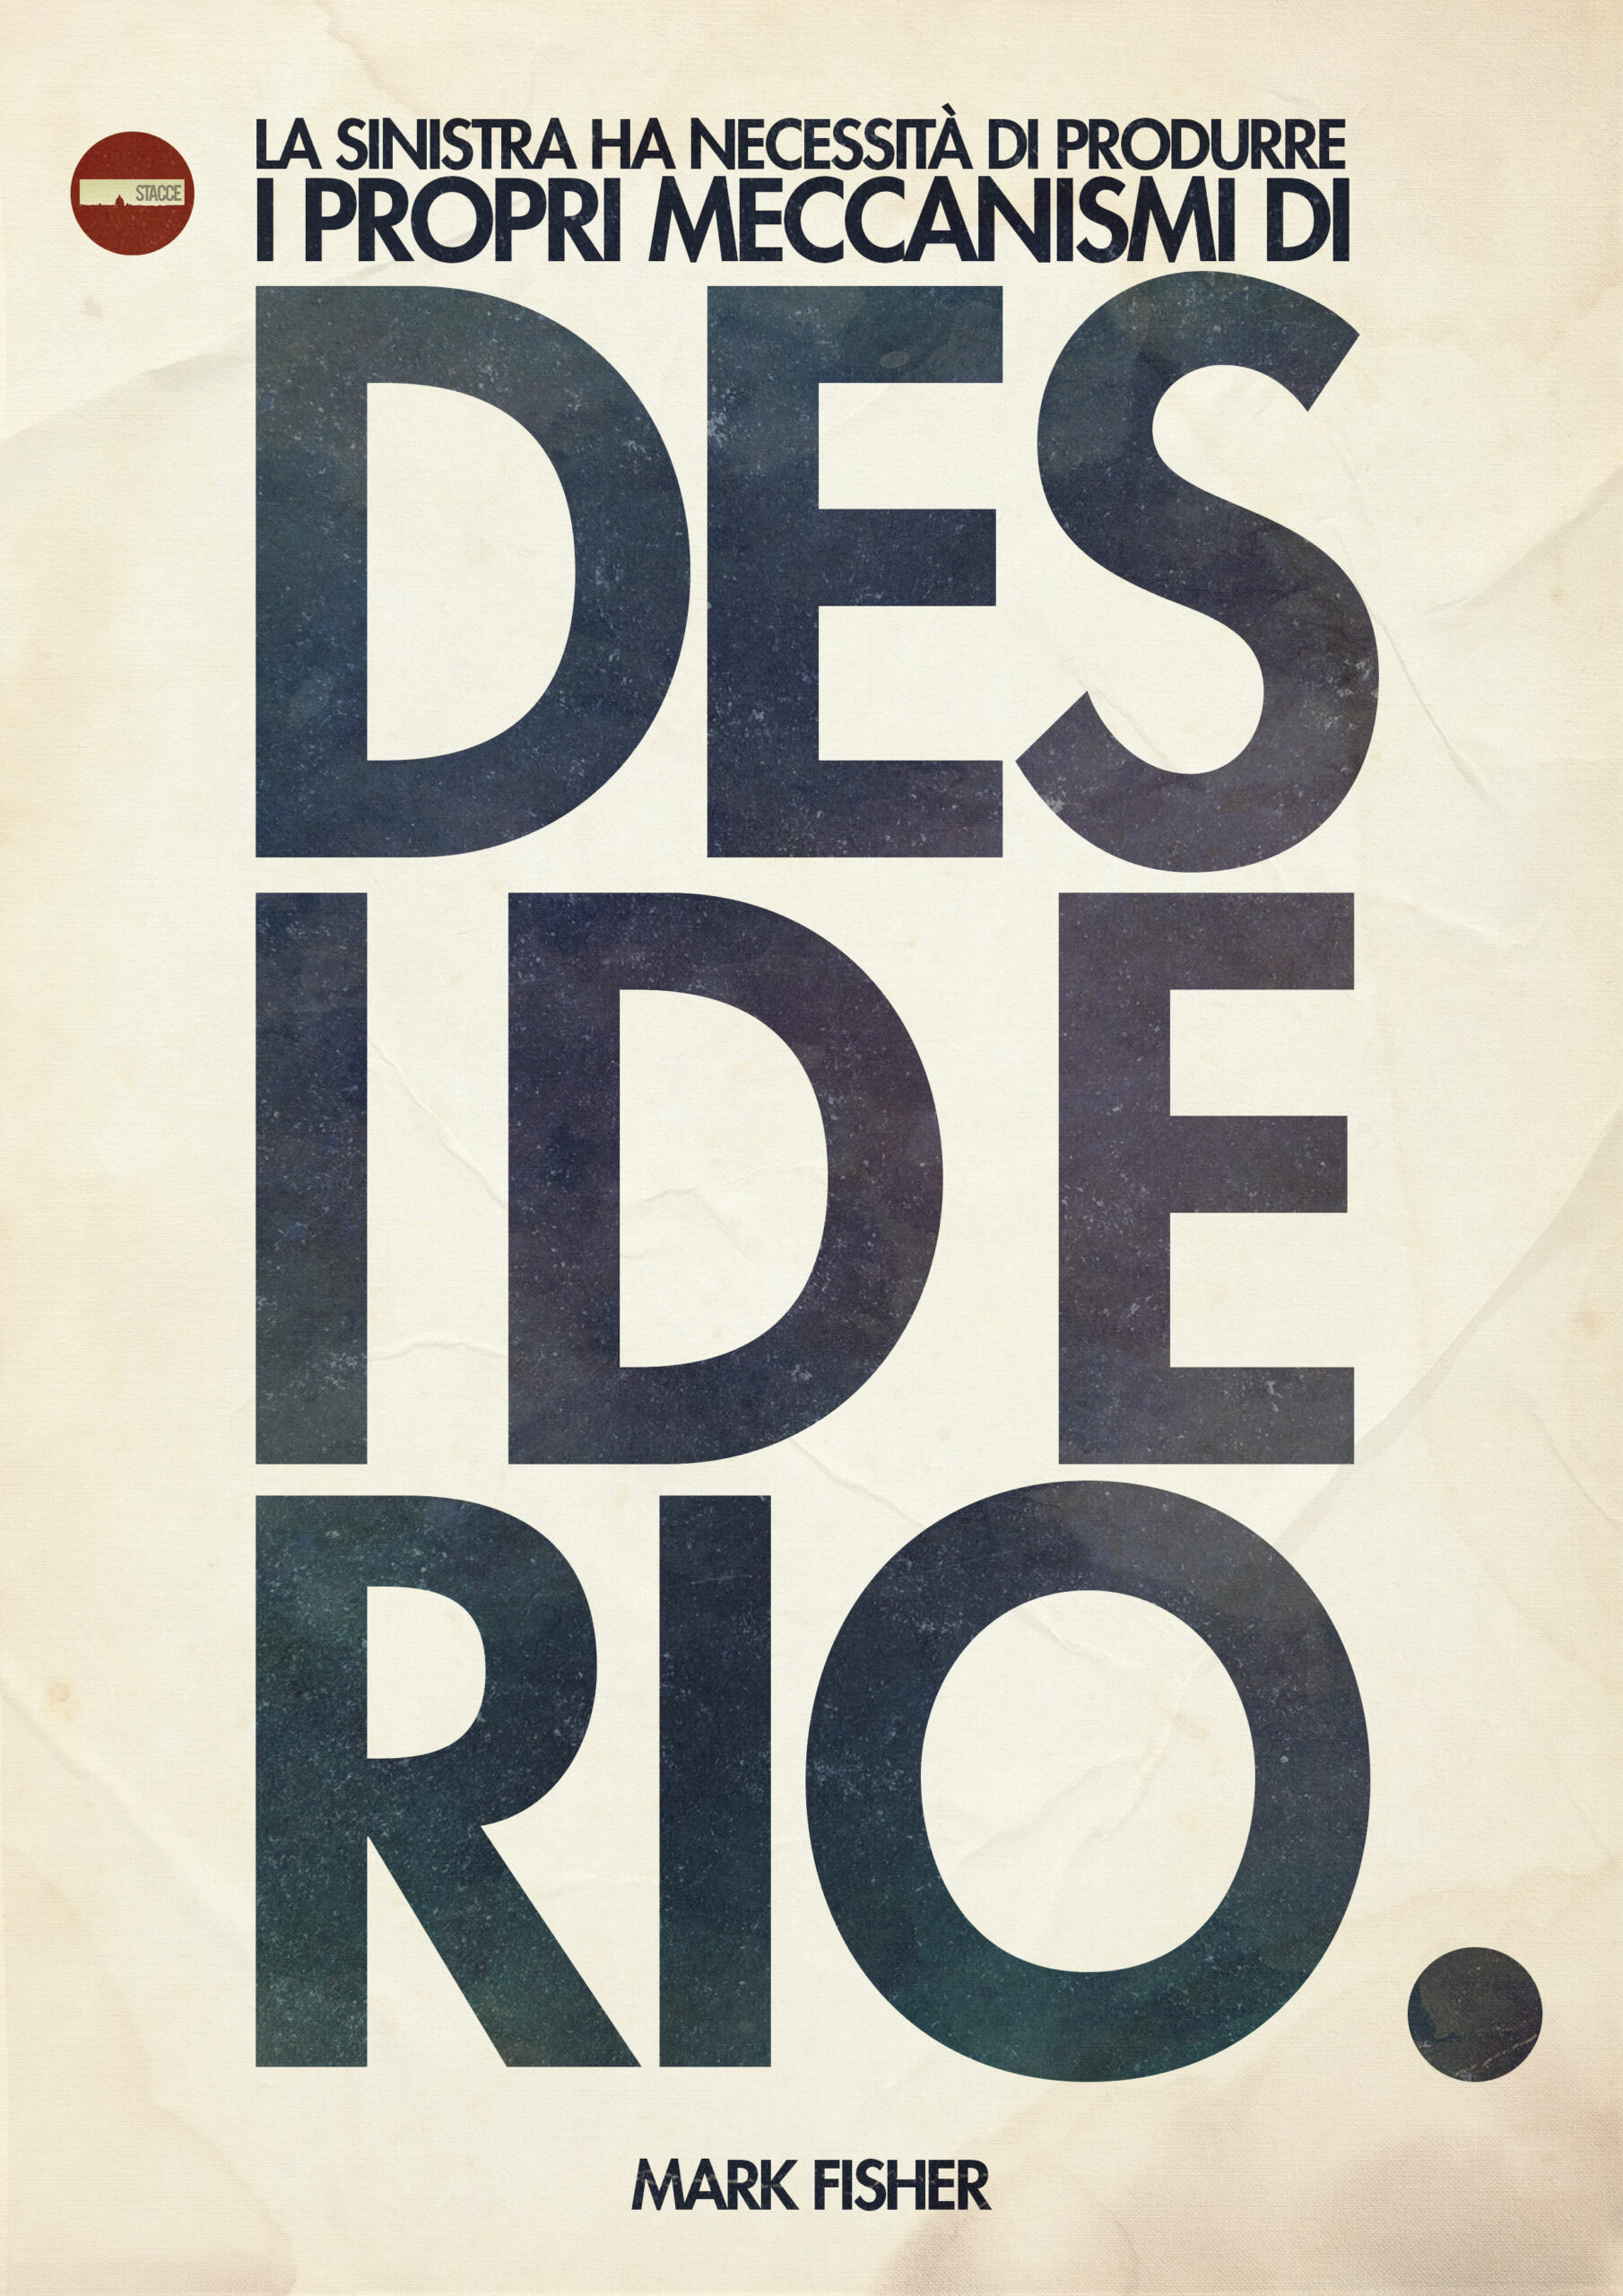 03 – Desiderio